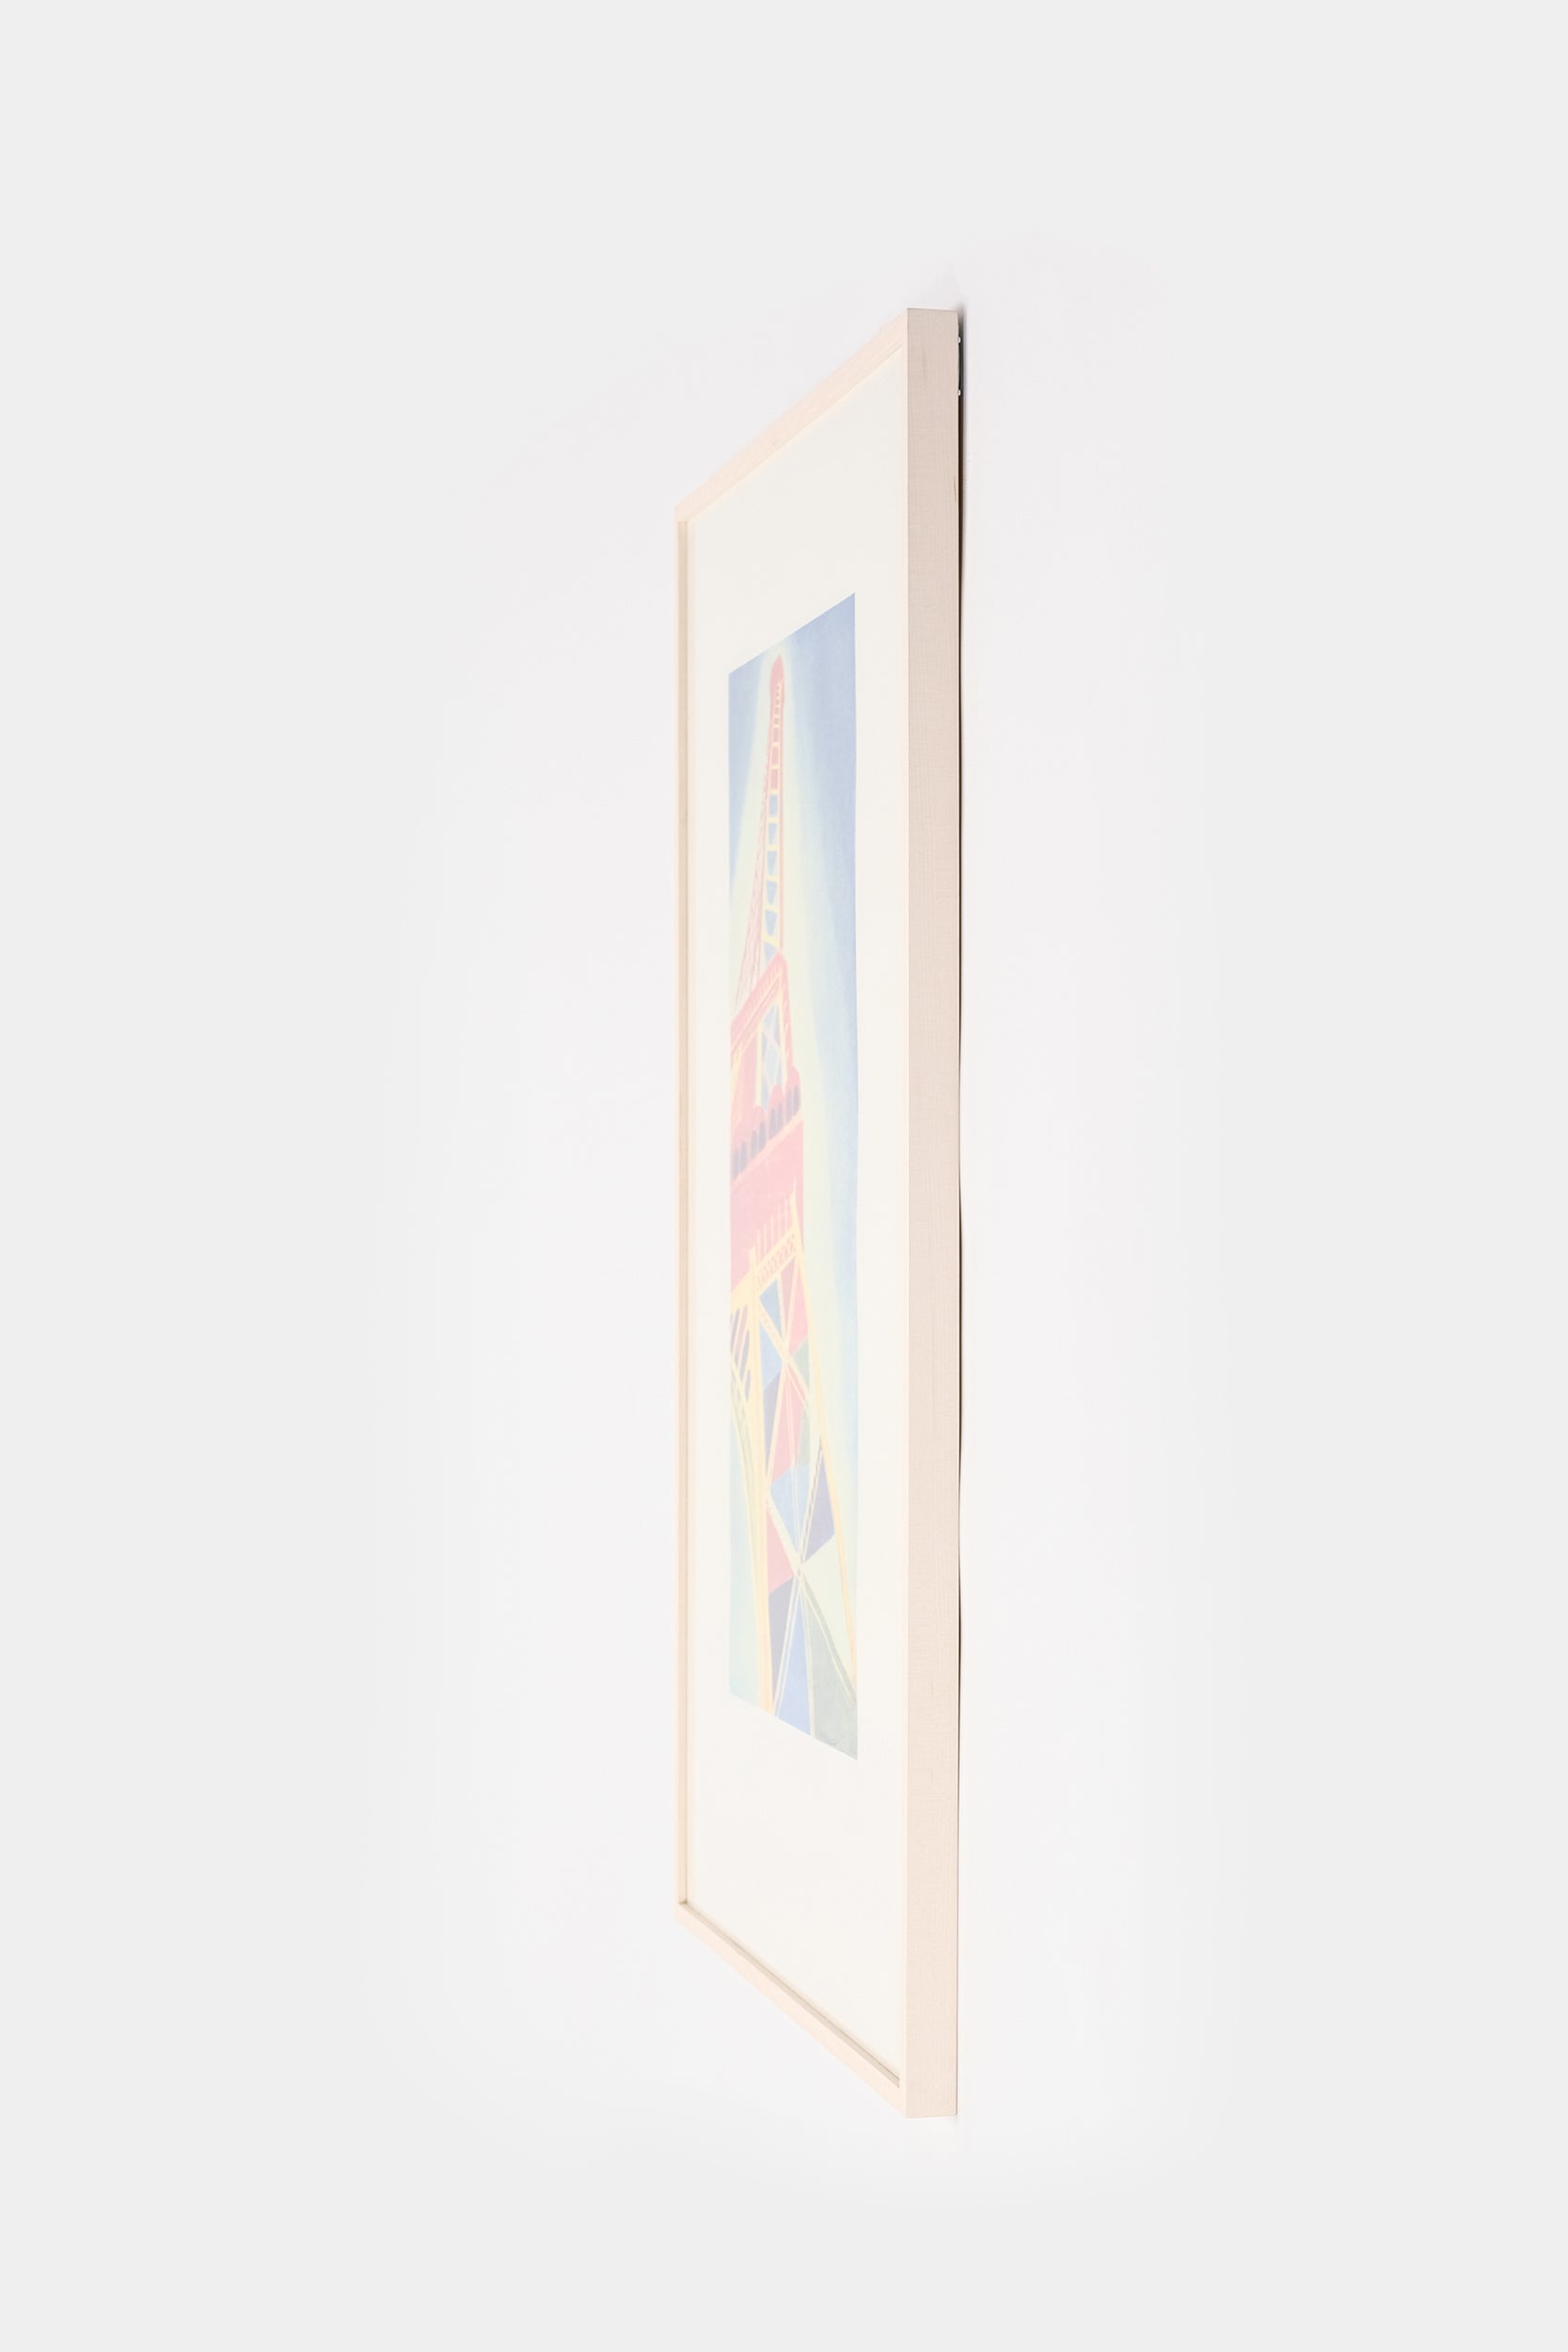 Robert Delaunay, Colourised Screen Print 112/200, 1990